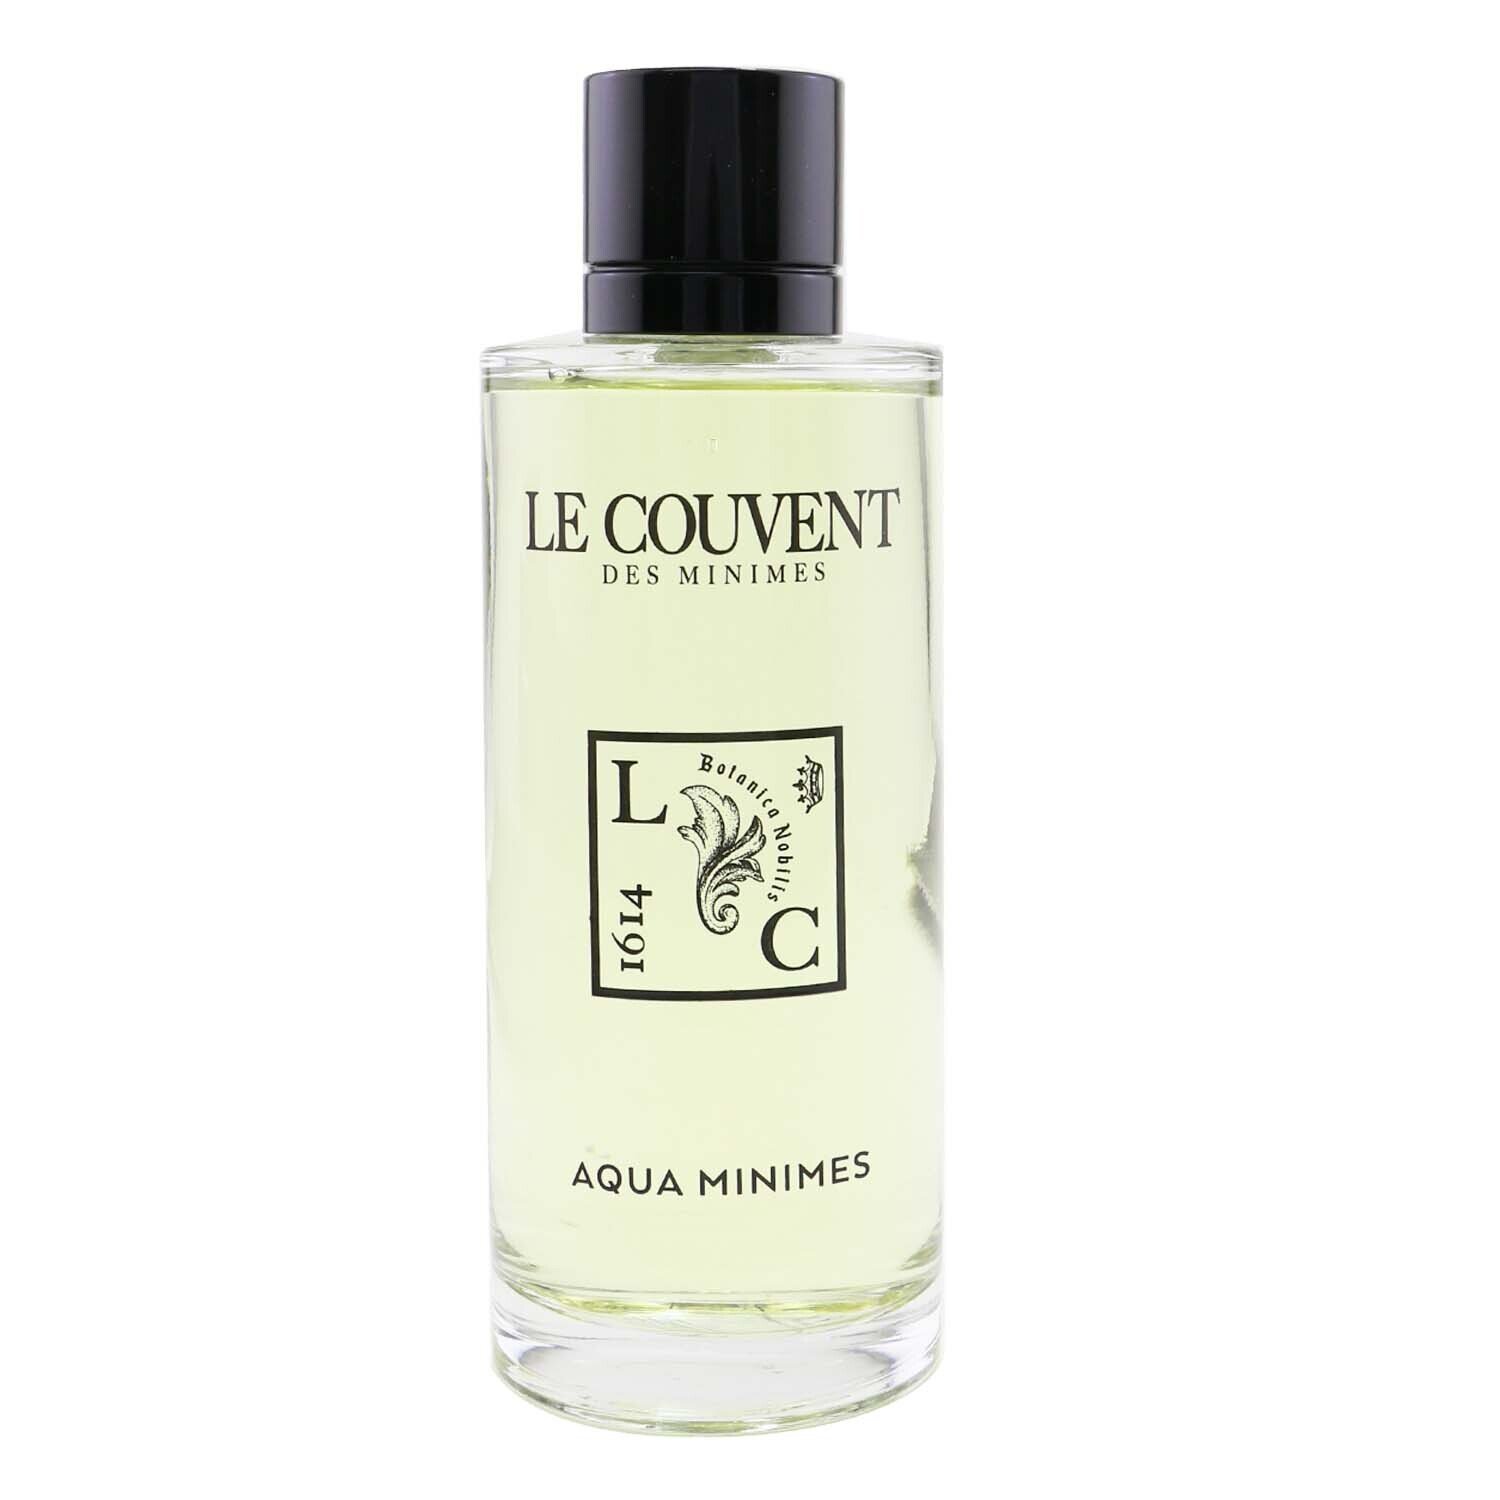 Le Couvent - AQUA MINIMES 檸檬山蒼樹淡香水